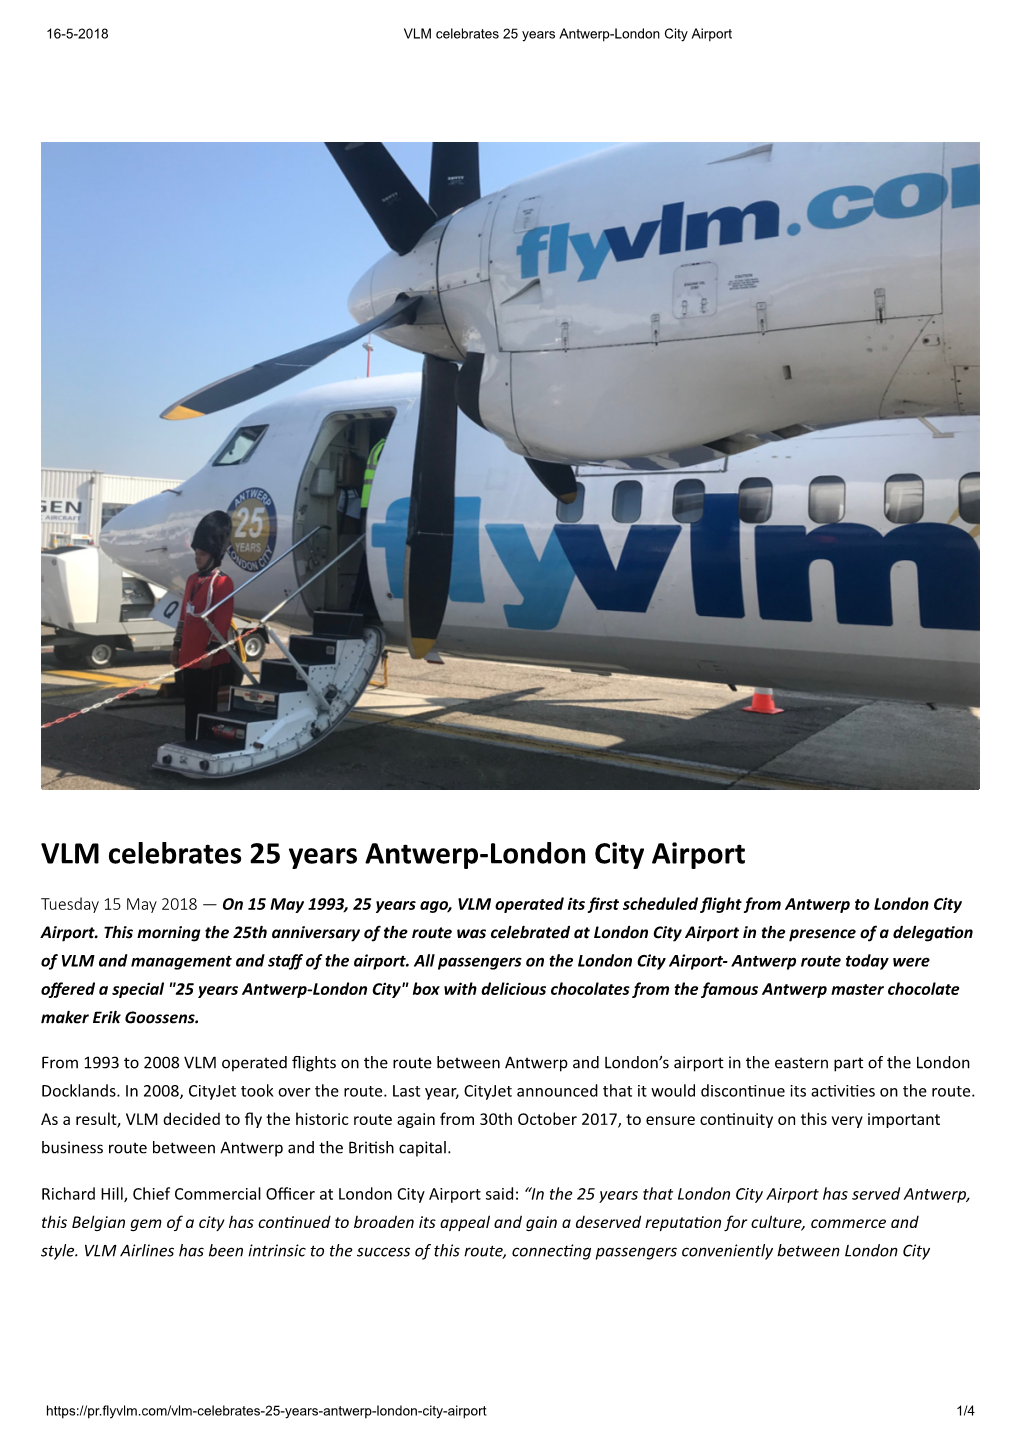 VLM Celebrates 25 Years Antwerp-London City Airport